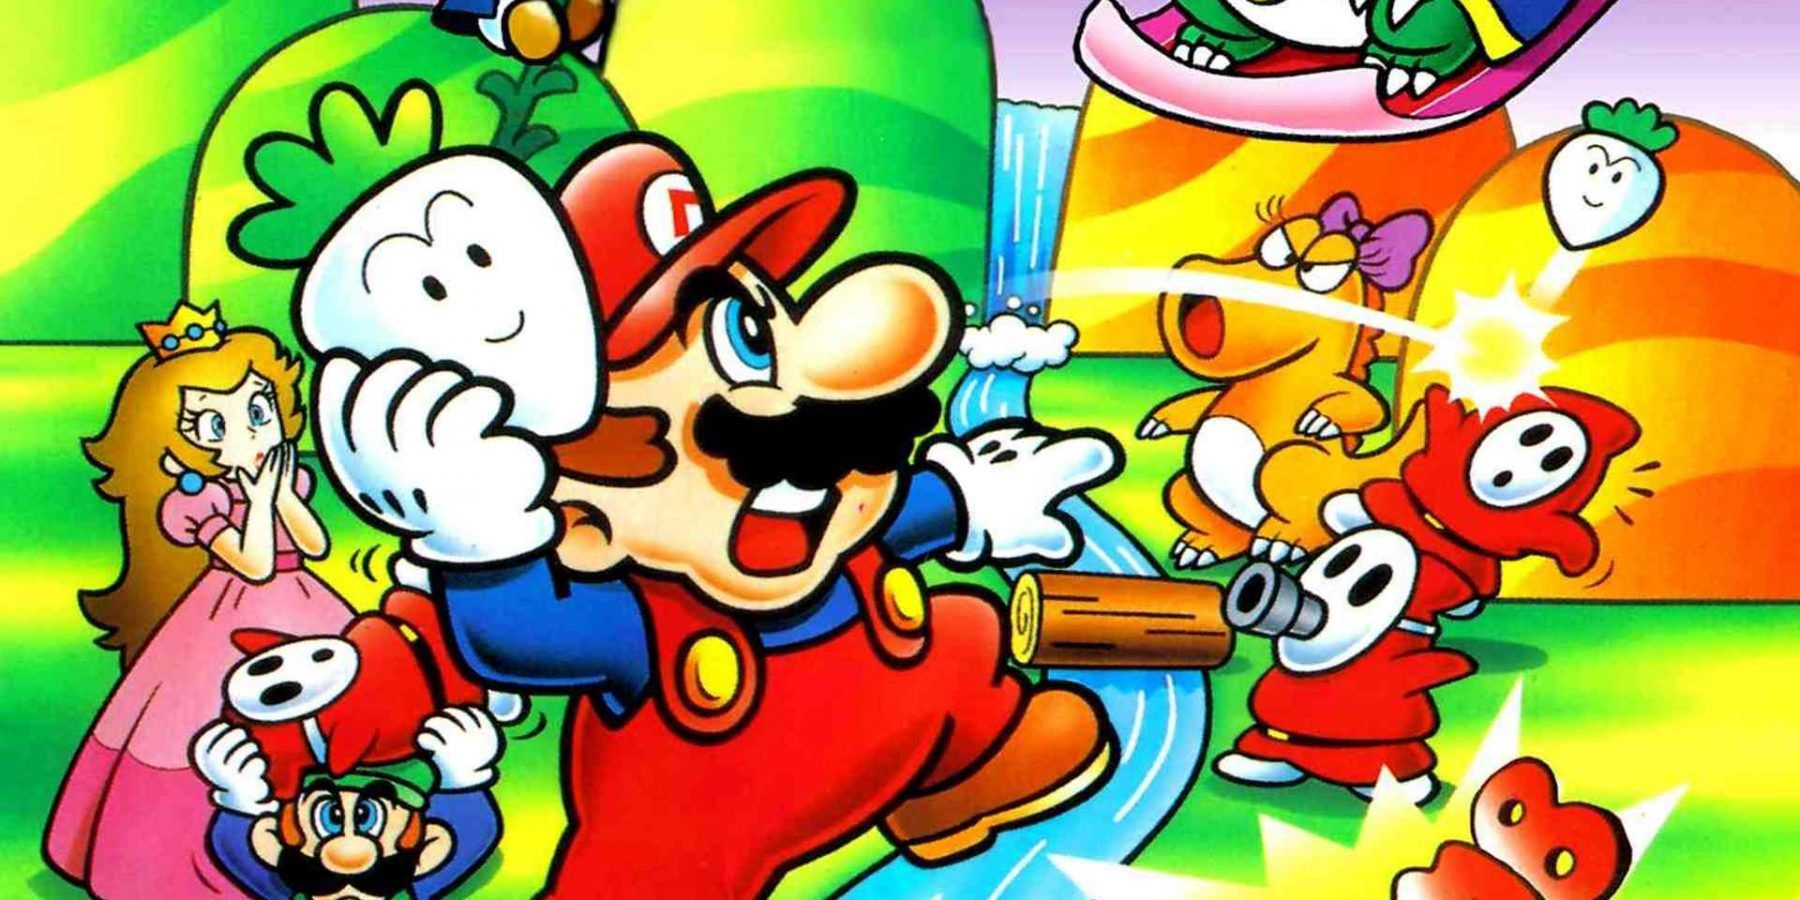 The US version of Super Mario Bros 2